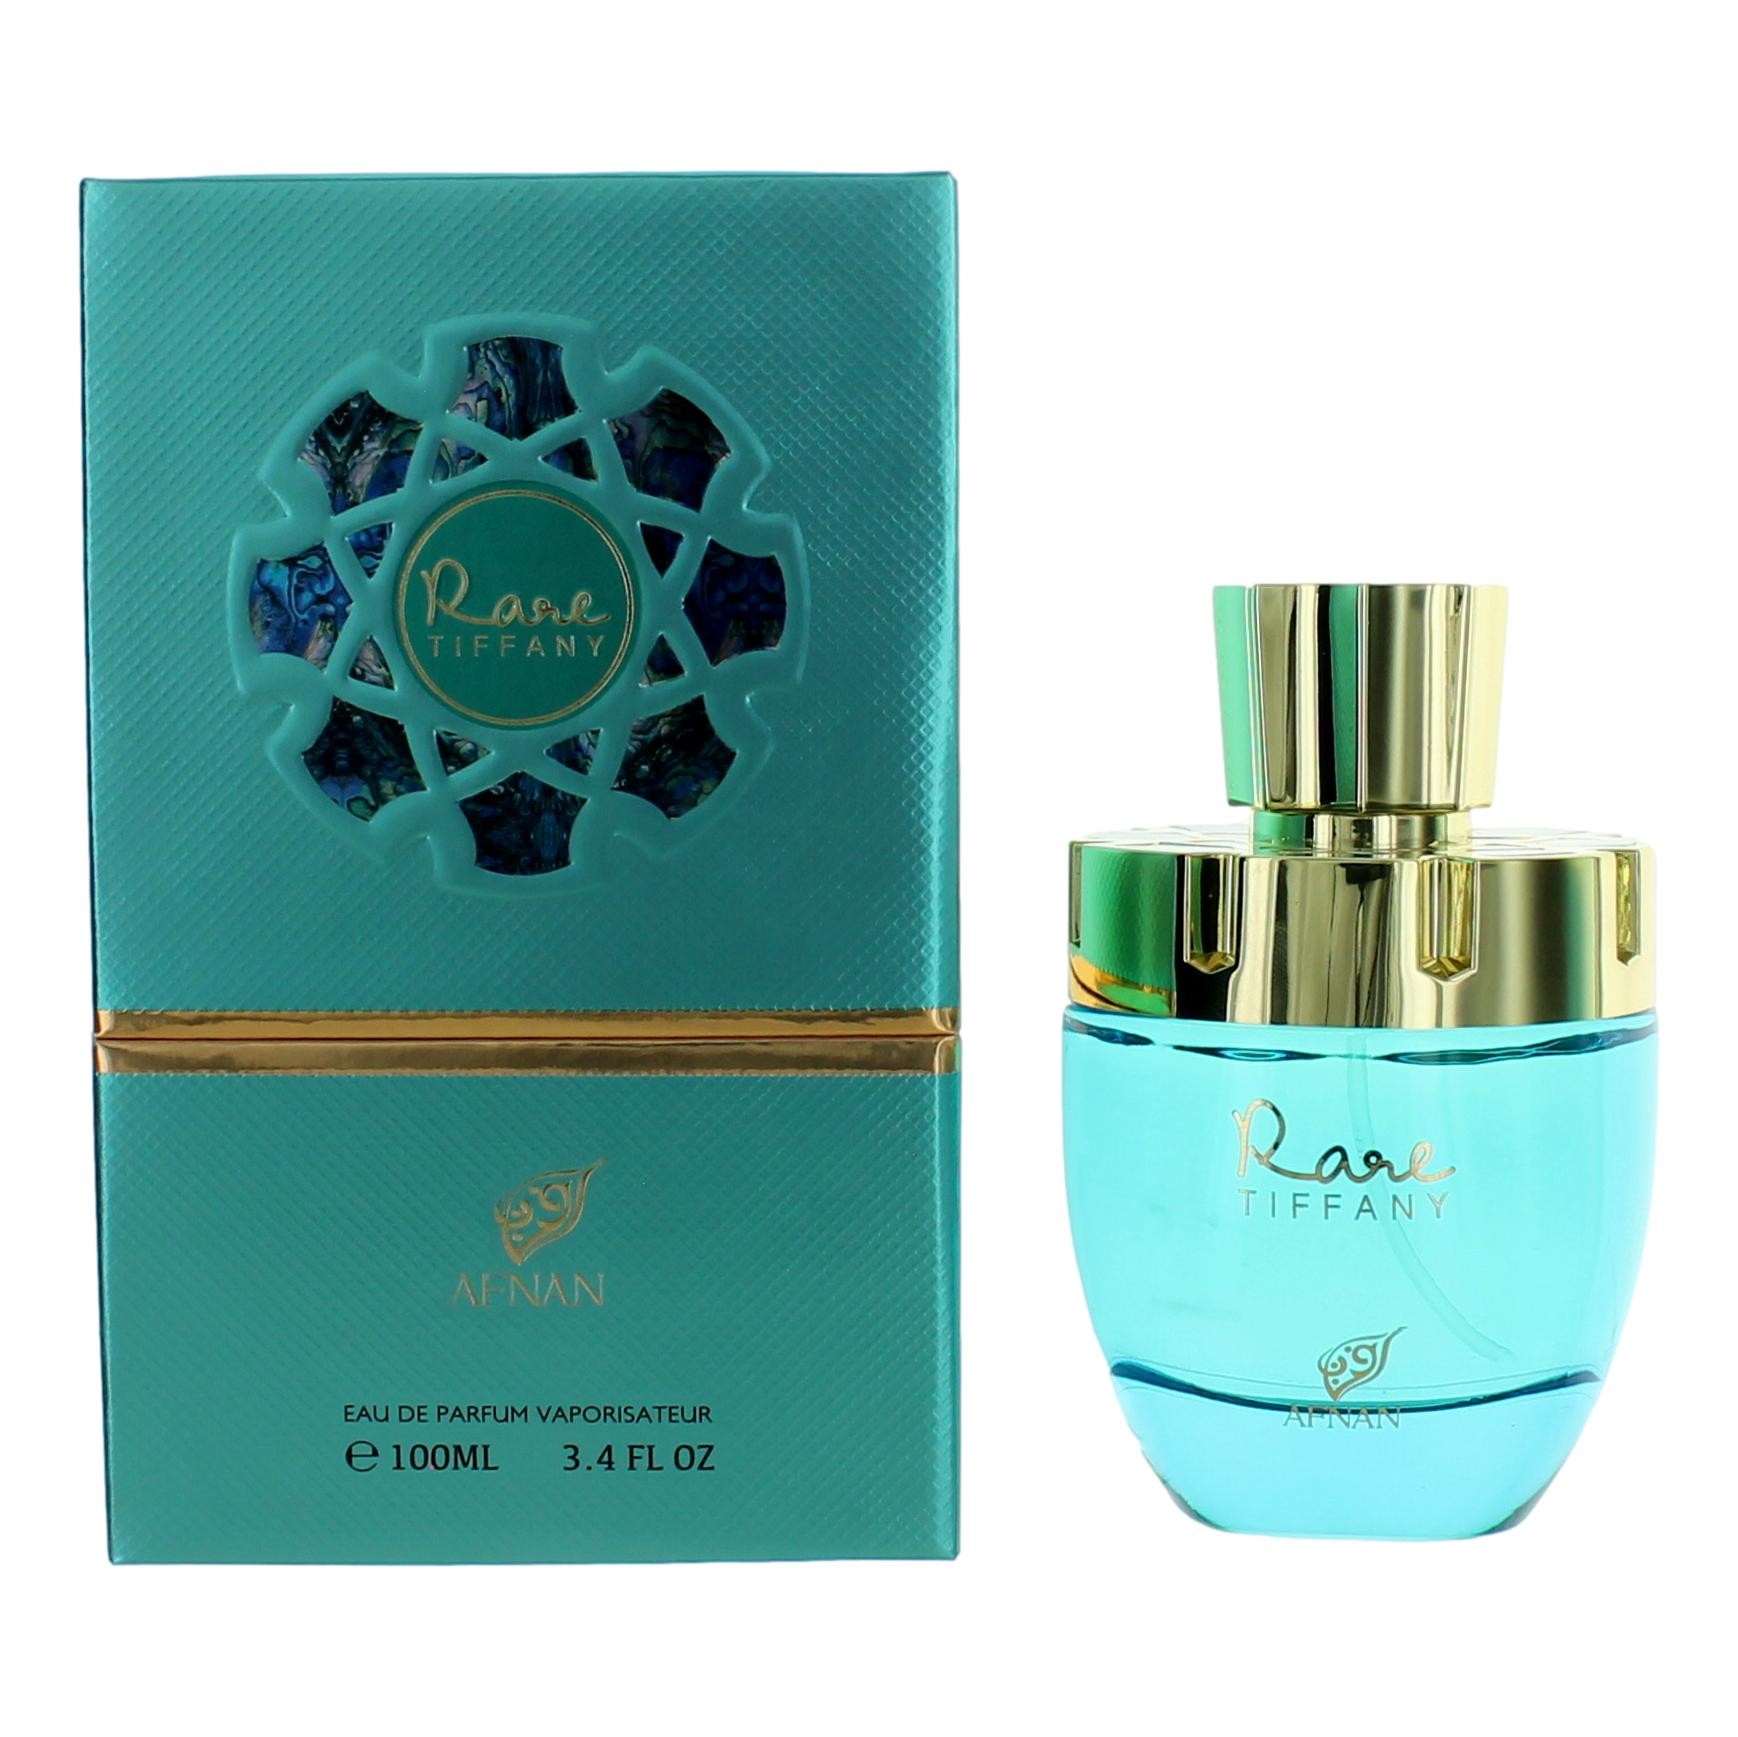 Afnan Rare Tiff any by Afnan. 3.4 oz Eau de Parfum Spray for Women